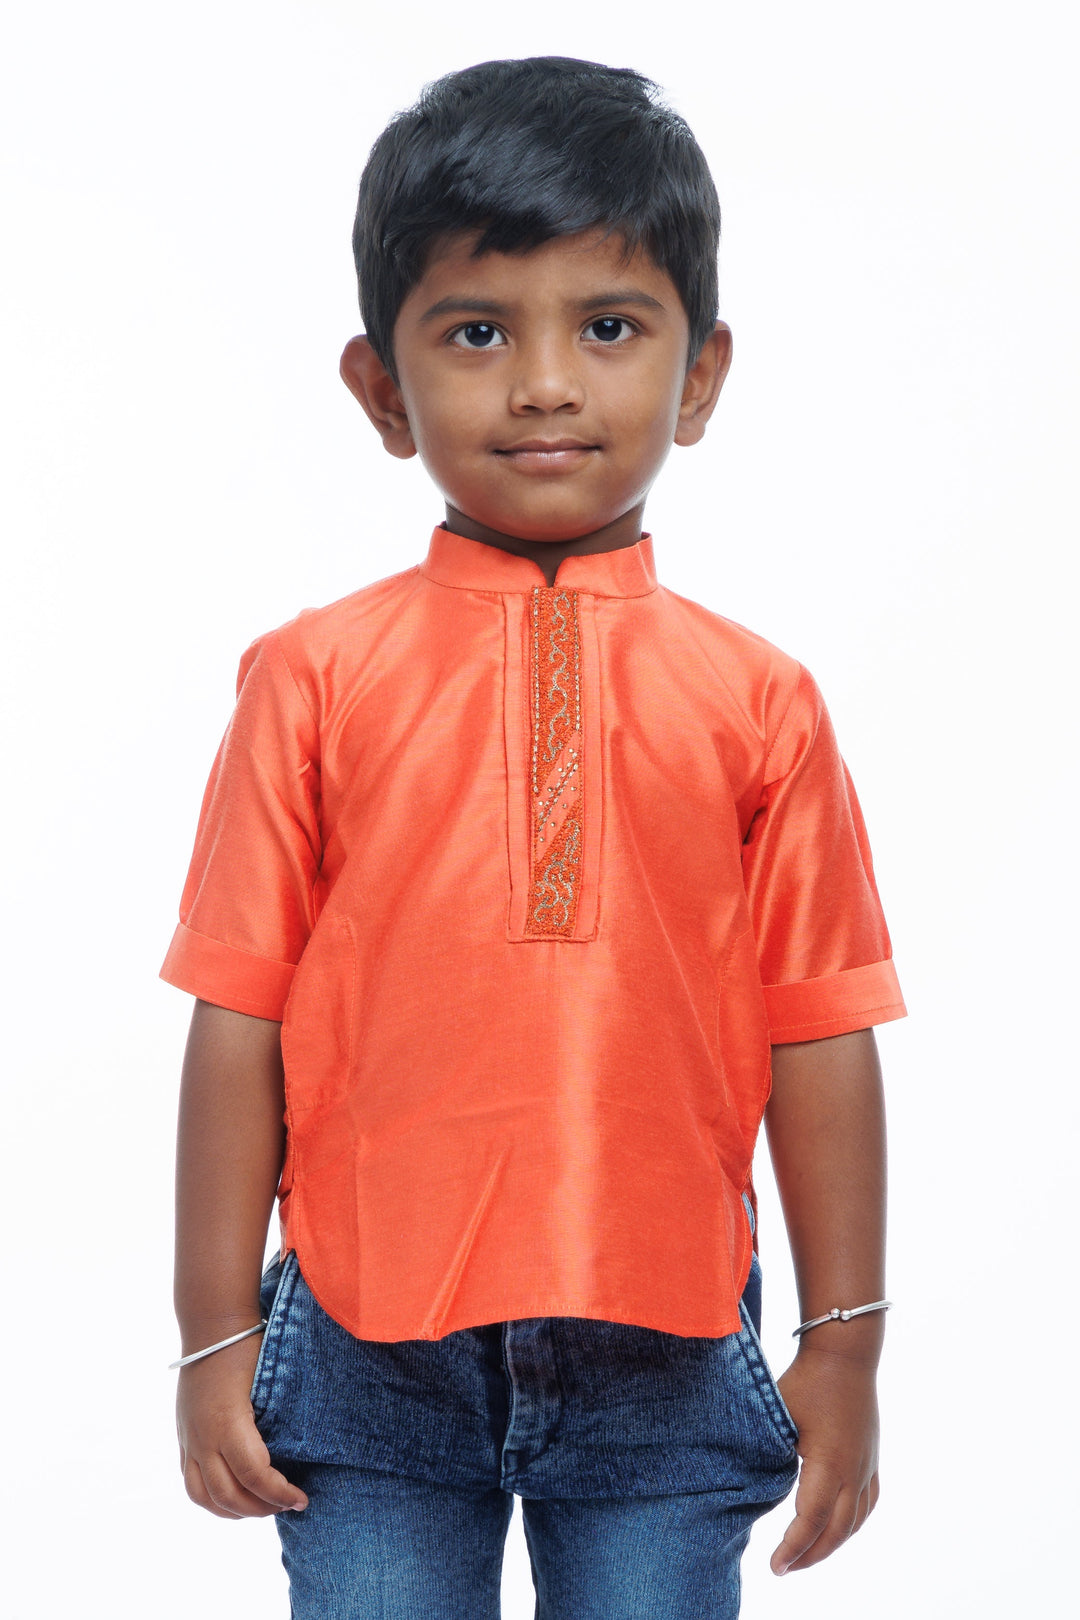 The Nesavu Boys Kurtha Shirt Boys Traditional Kurta Shirt in Rustic Orange - Elegance Meets Comfort Nesavu 16 (1Y) / Orange / Blend Silk BS137A-16 Traditional Boys Kurta Shirt | Rustic Orange Comfort Wear | The Nesavu